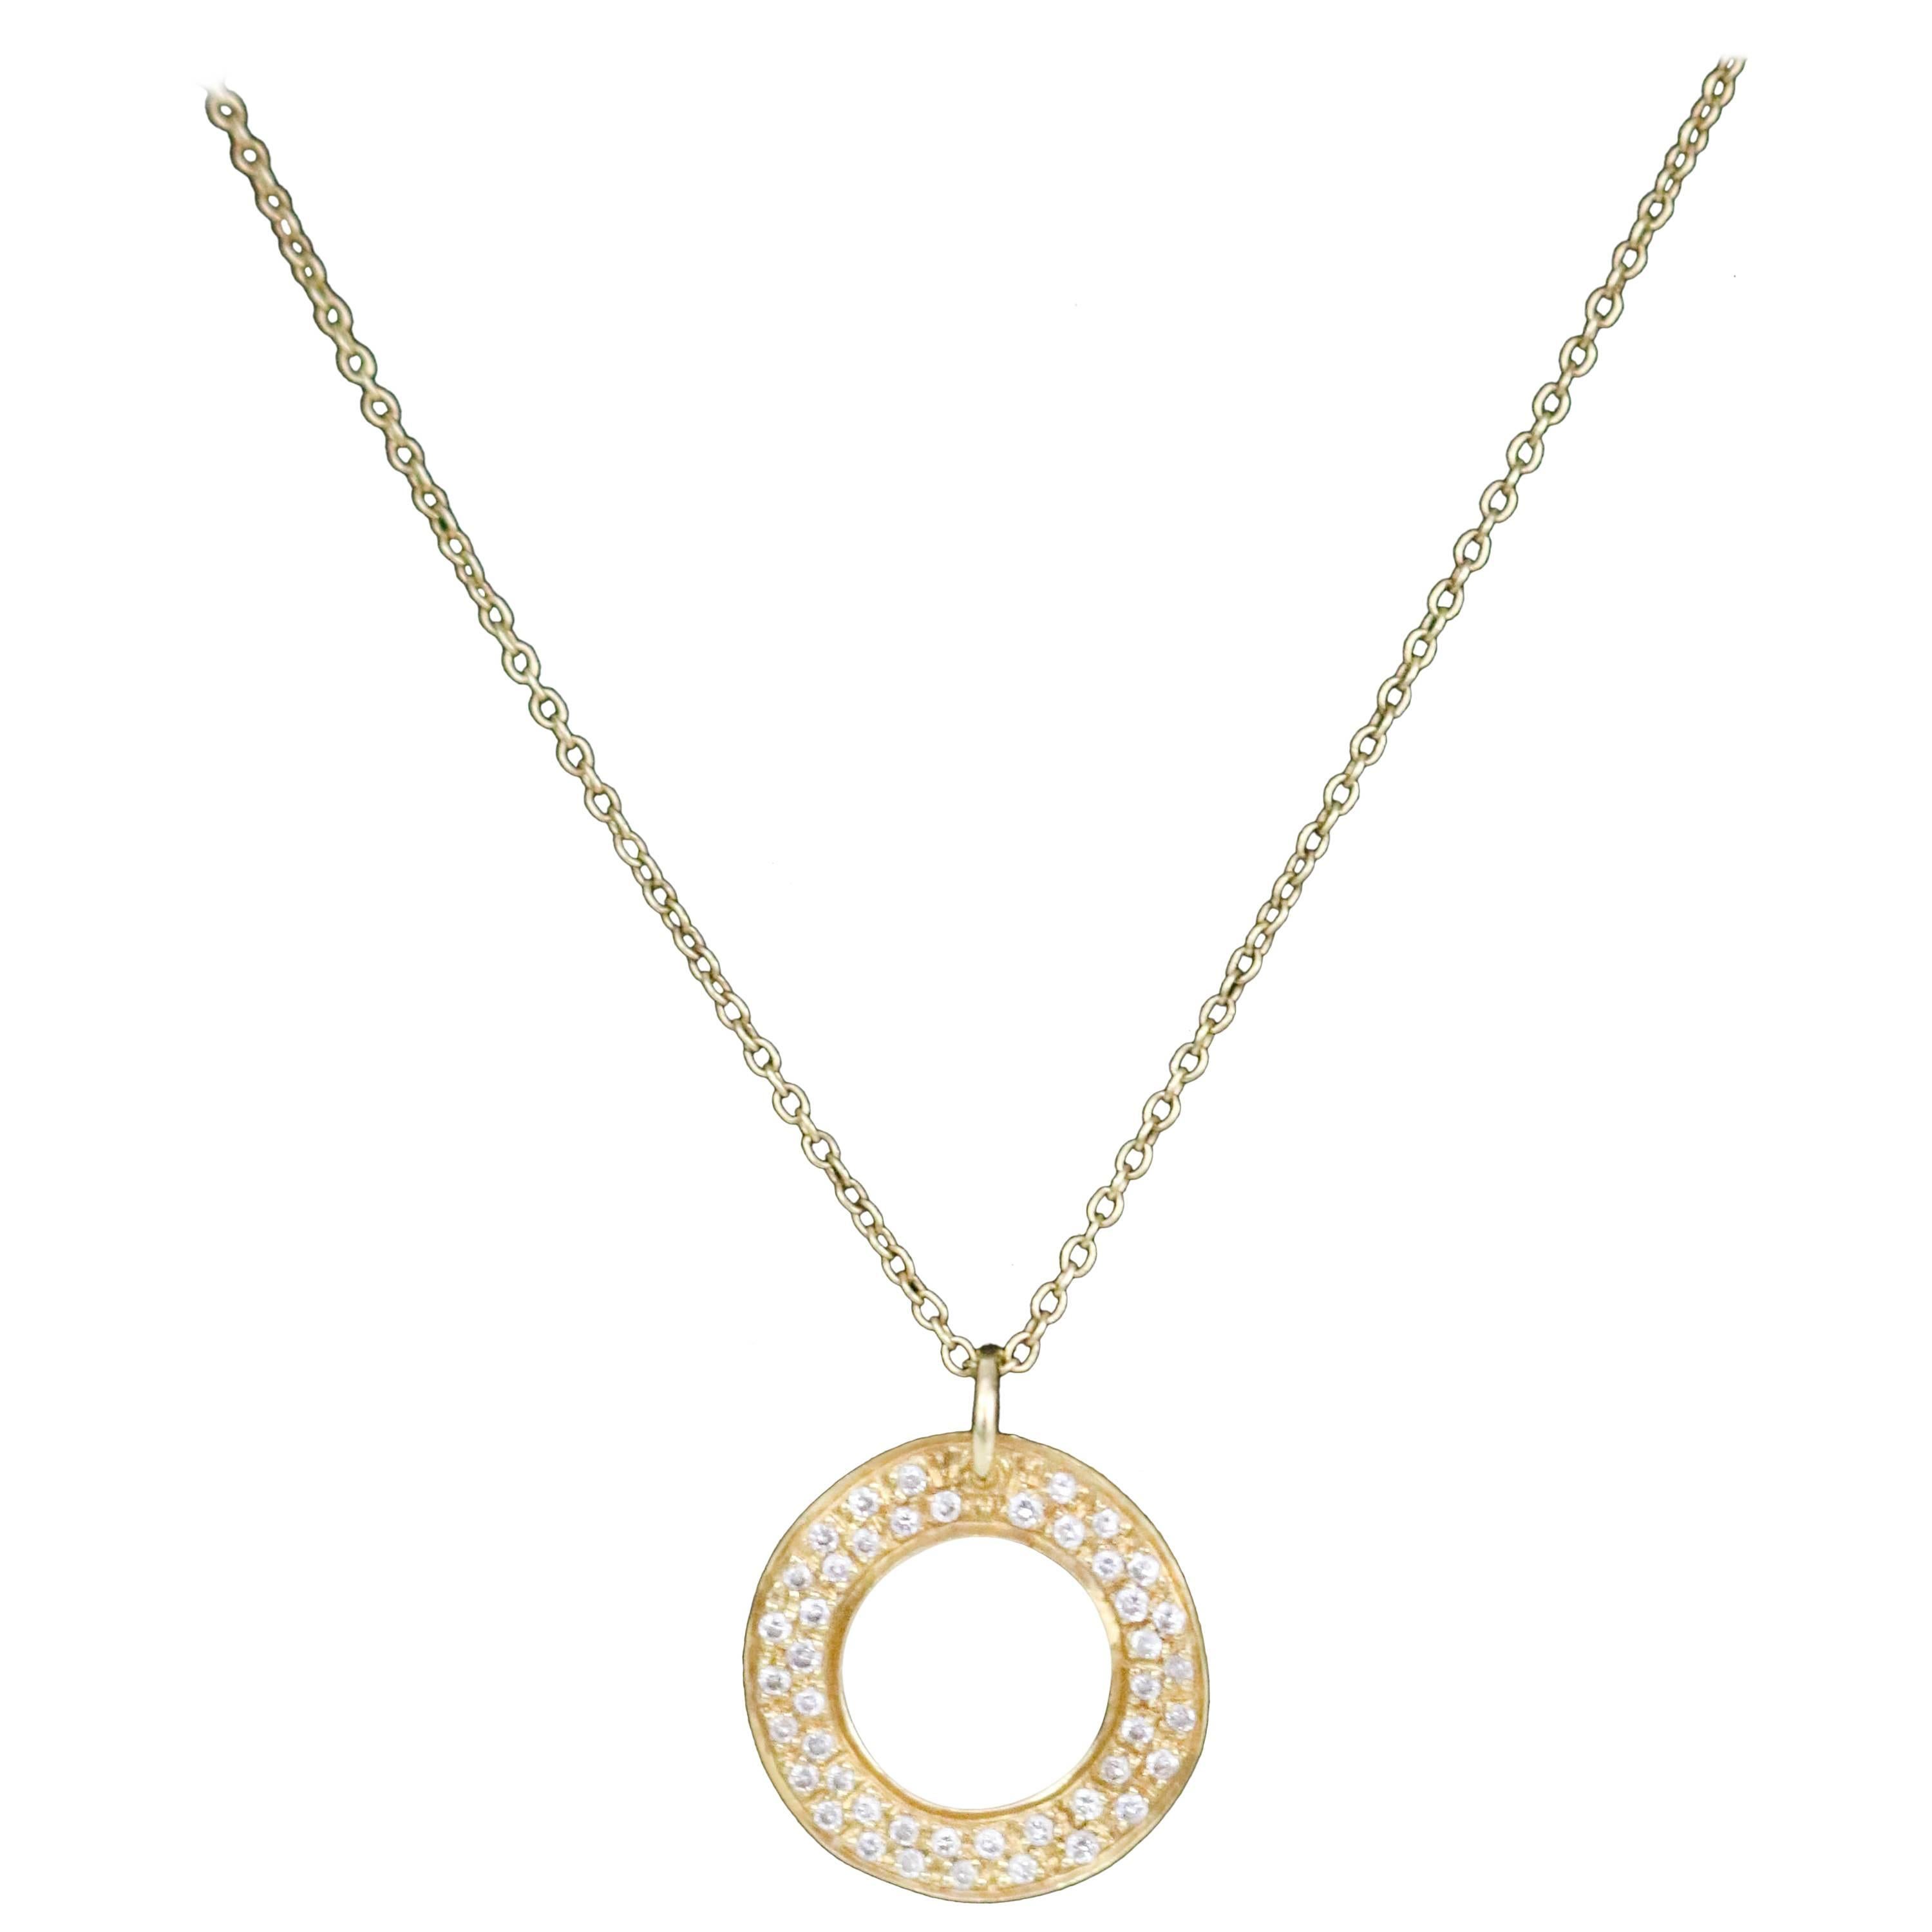 Ippolita Stardust 18k Gold Open Circle Pendant with Pave Diamonds